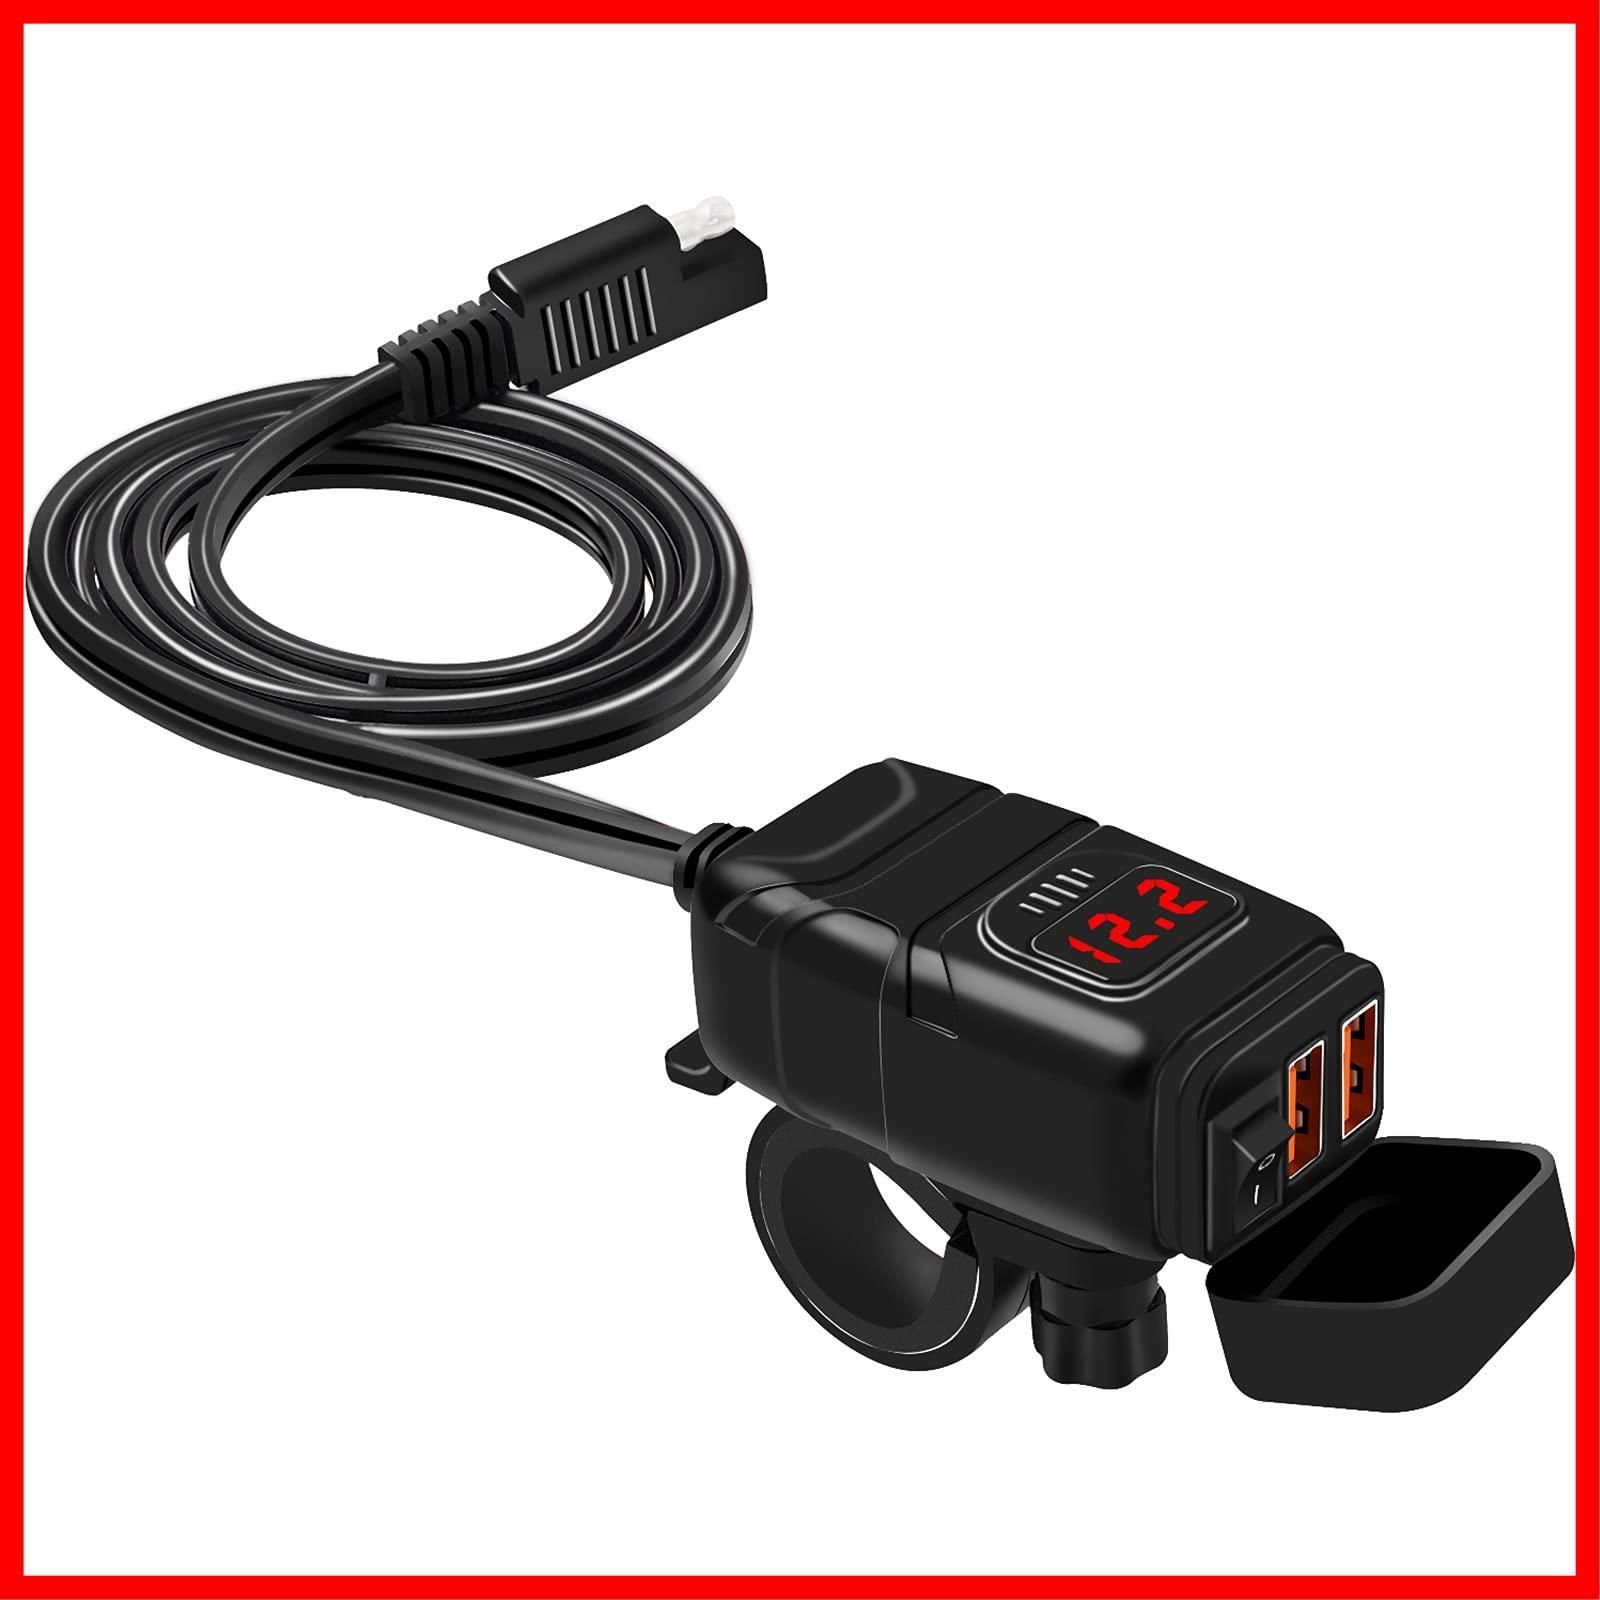 SHEAWA バイク USB電源 充電器 USB2ポート QC3.0 電圧計 温度計 急速充電 電源ON OFFスイッチ Quick Charge 3.0 オートバイのハンドルに取り付け可能